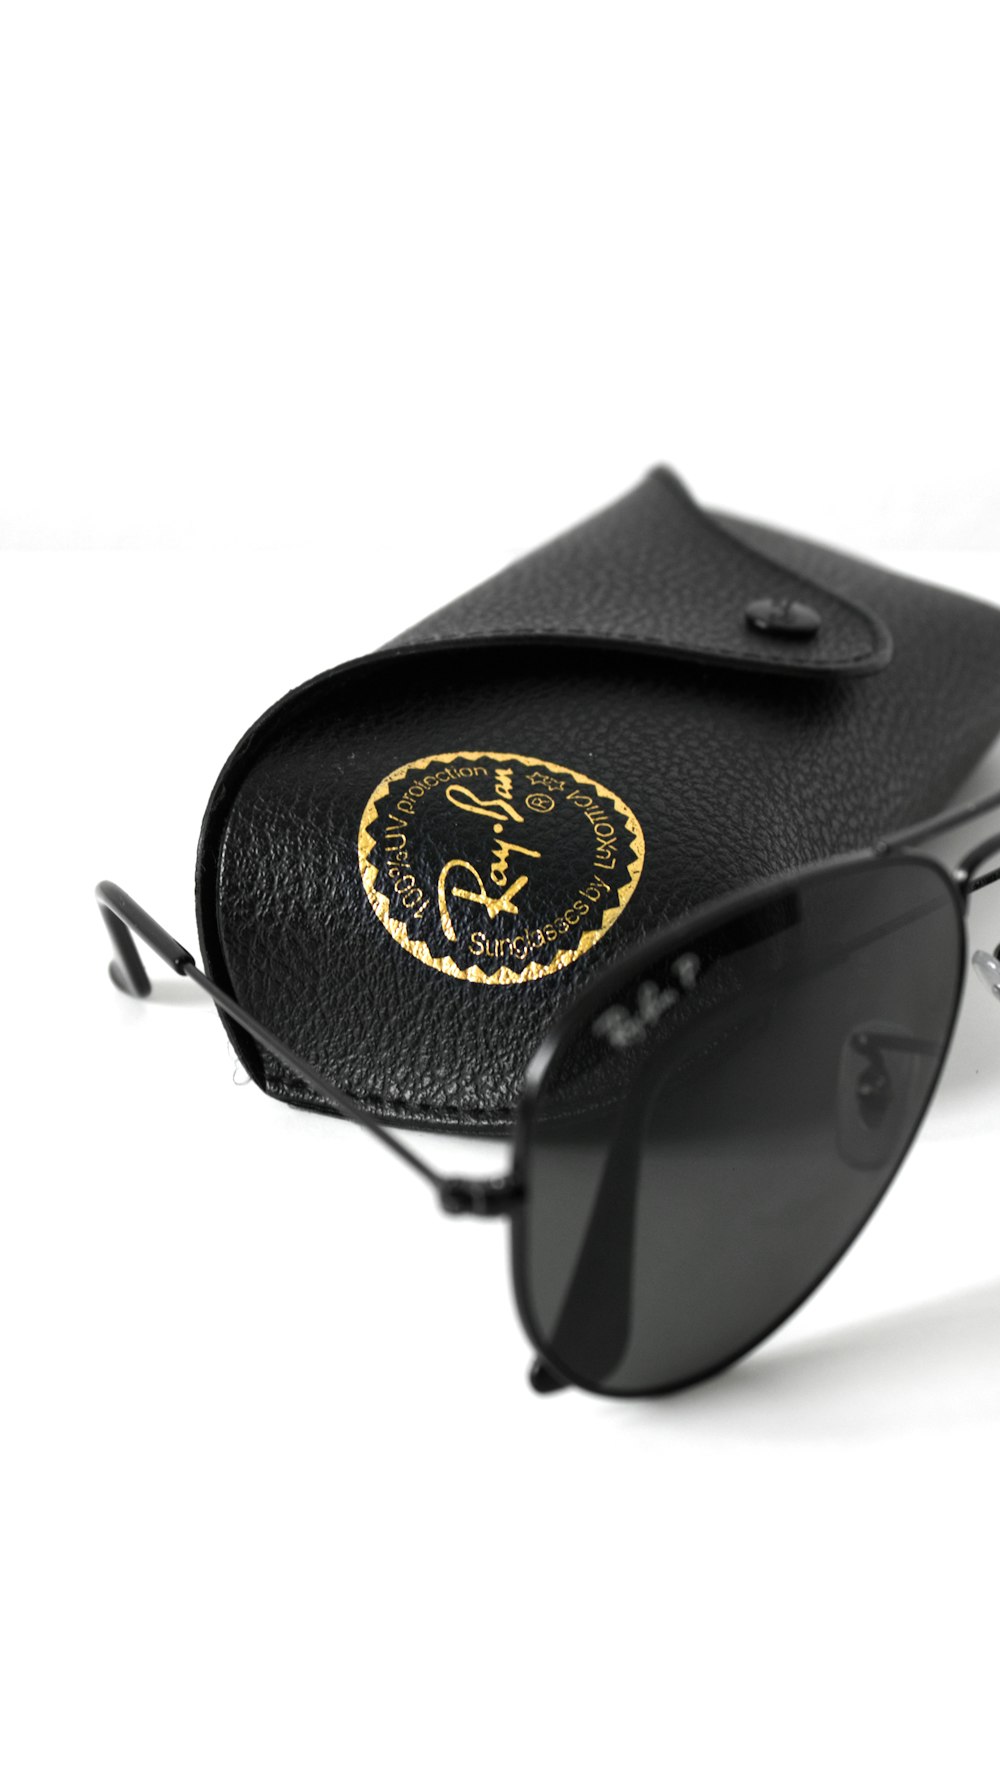 Black and gold ray ban aviator sunglasses photo – Free Sunglasses Image on  Unsplash